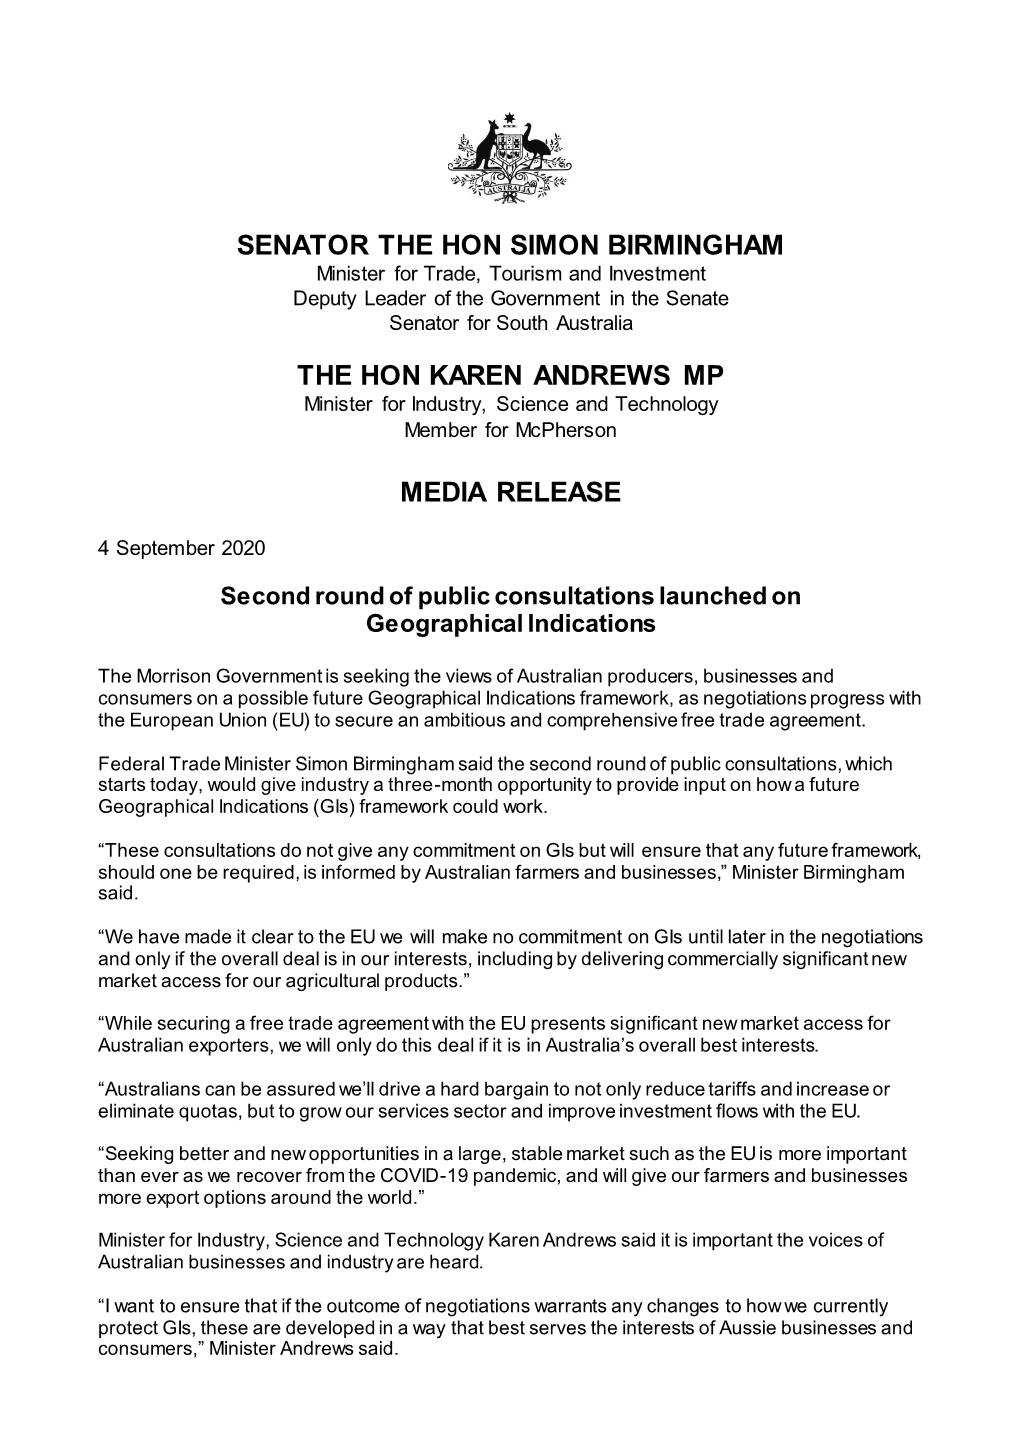 Senator the Hon Simon Birmingham the Hon Karen